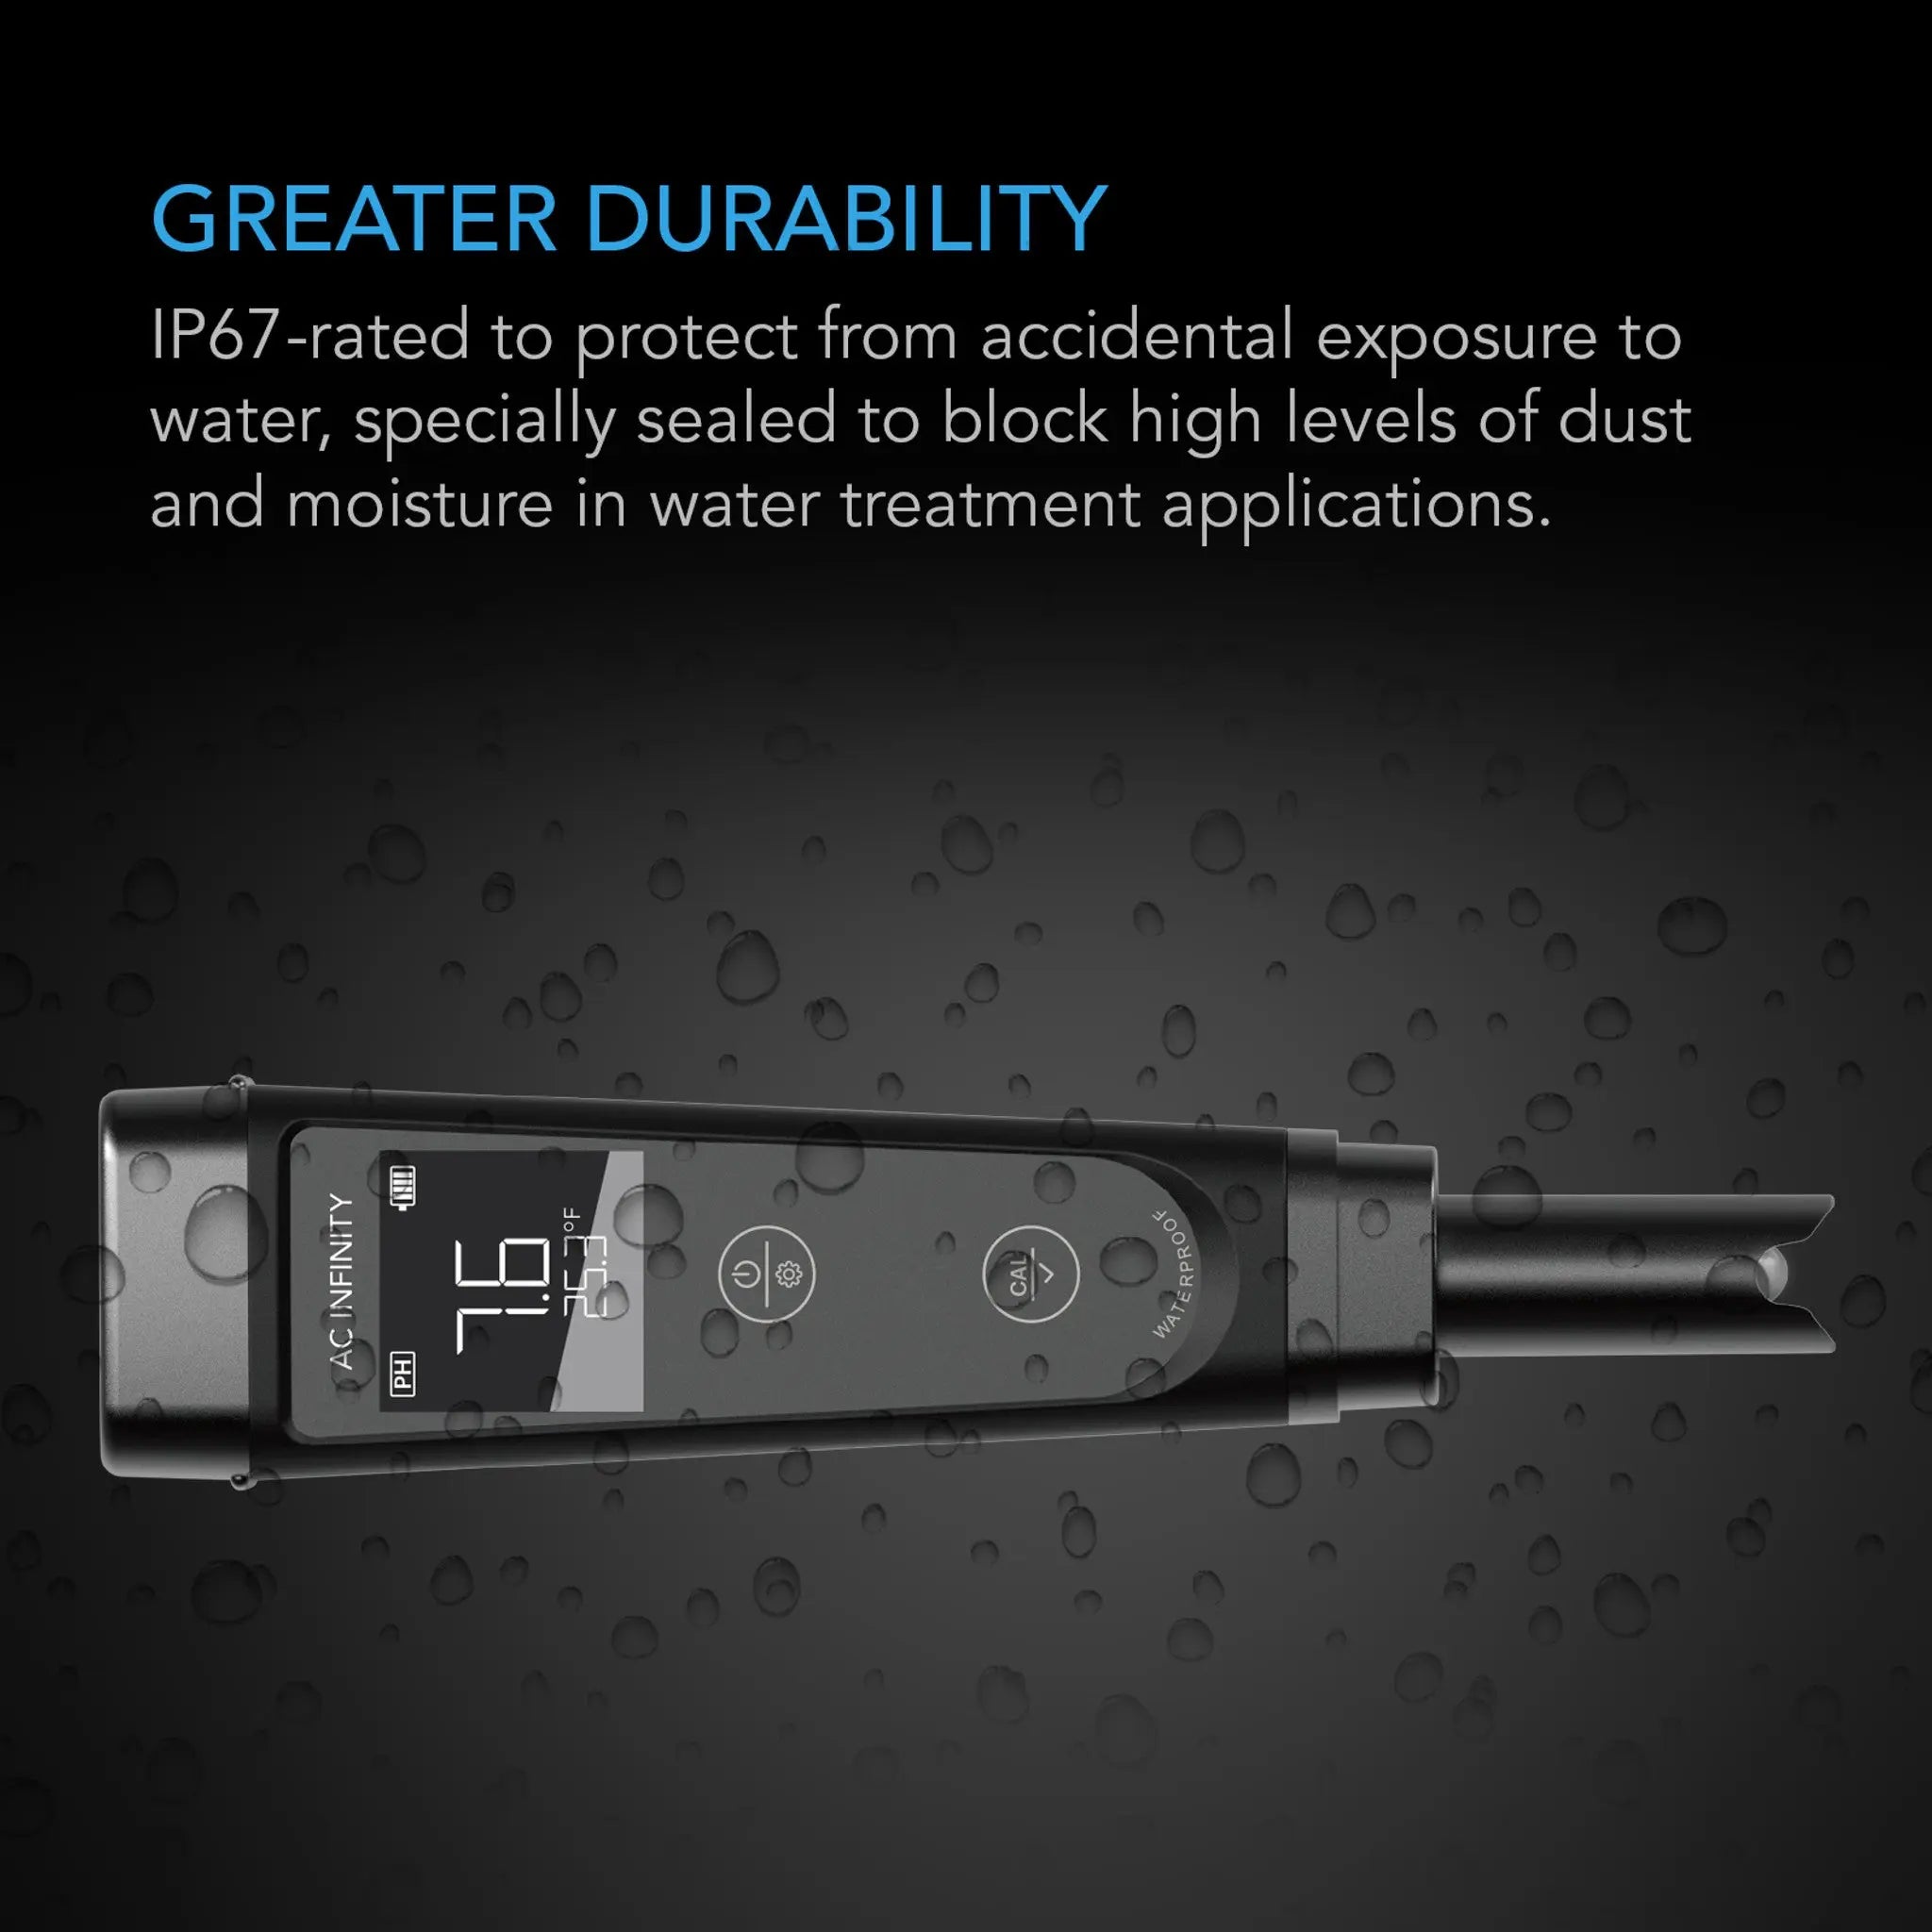 AC Infinity Hydroponic Meter PRO Kit, All-In-One Ph Pen, Interchangeable Probe